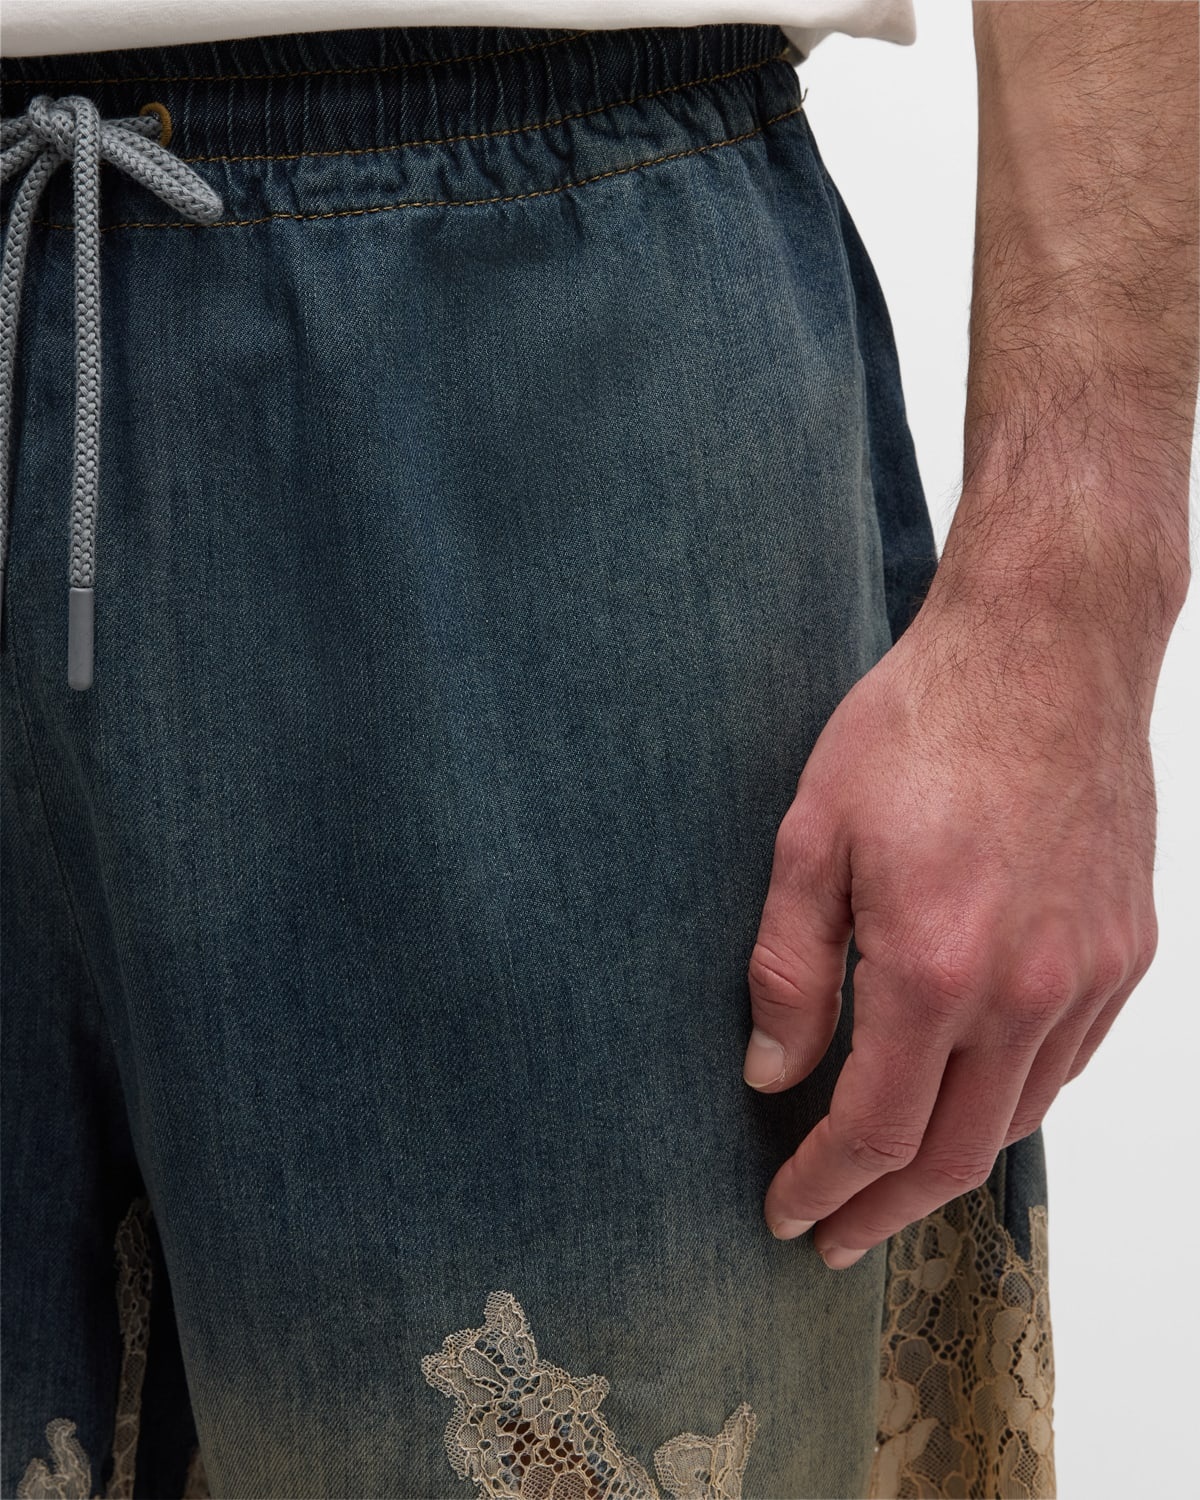 Men's Denim and Lace Drawstring Shorts - 5